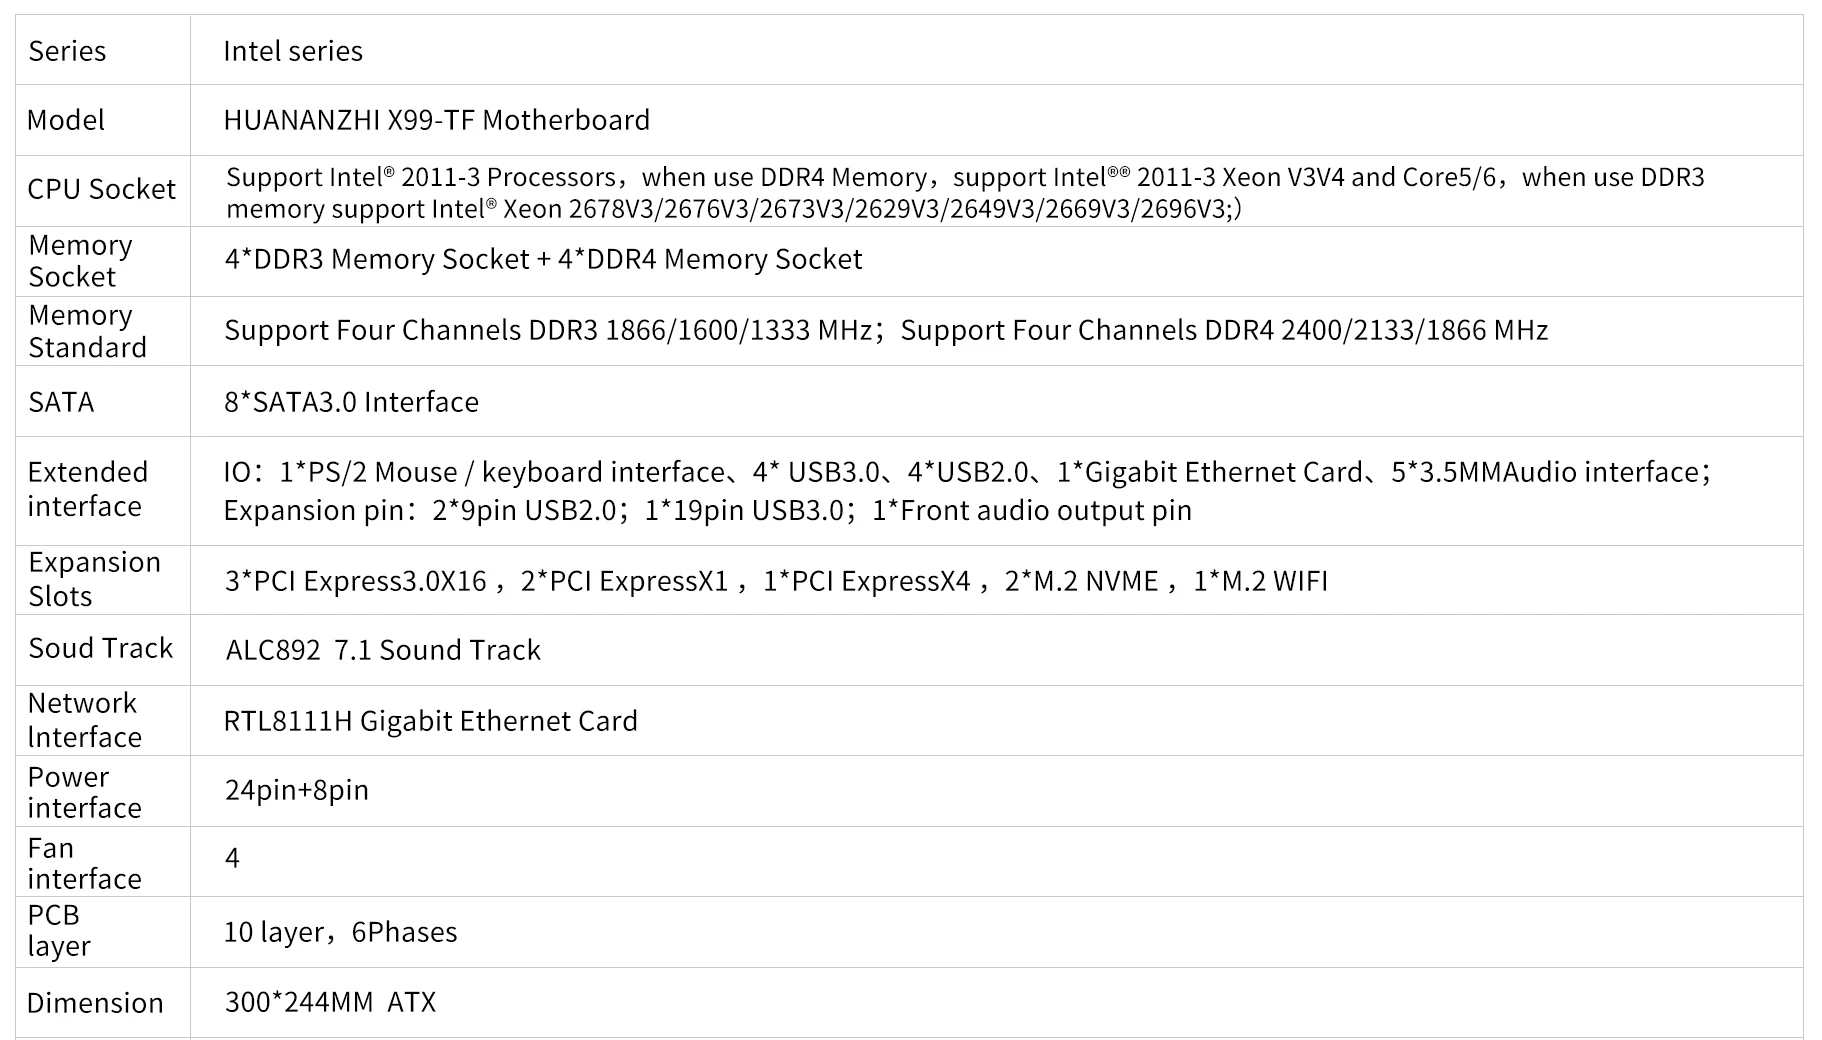 

HUANANZHI X99 TF Motherboard combo kit set Intel XEON E5 2696 v3 support DDR3 DDR4 RECC NON-ECC memory M.2 NVME USB3.0 ATX